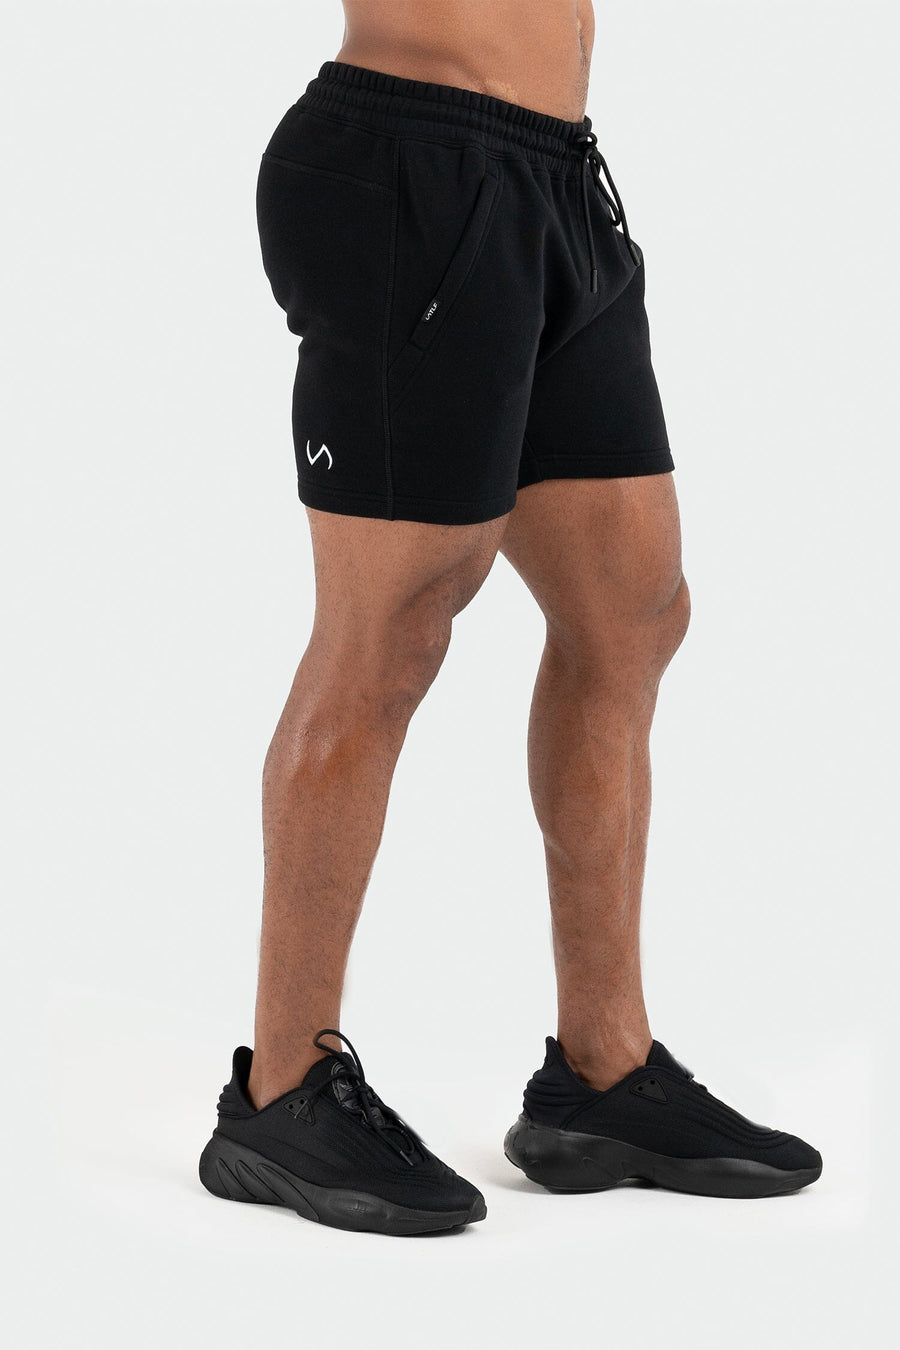 TLF Pivotal 6" Fleece Shorts – Men’s Gym Shorts - 6 Inch Inseam Men's Shorts - Black - 5